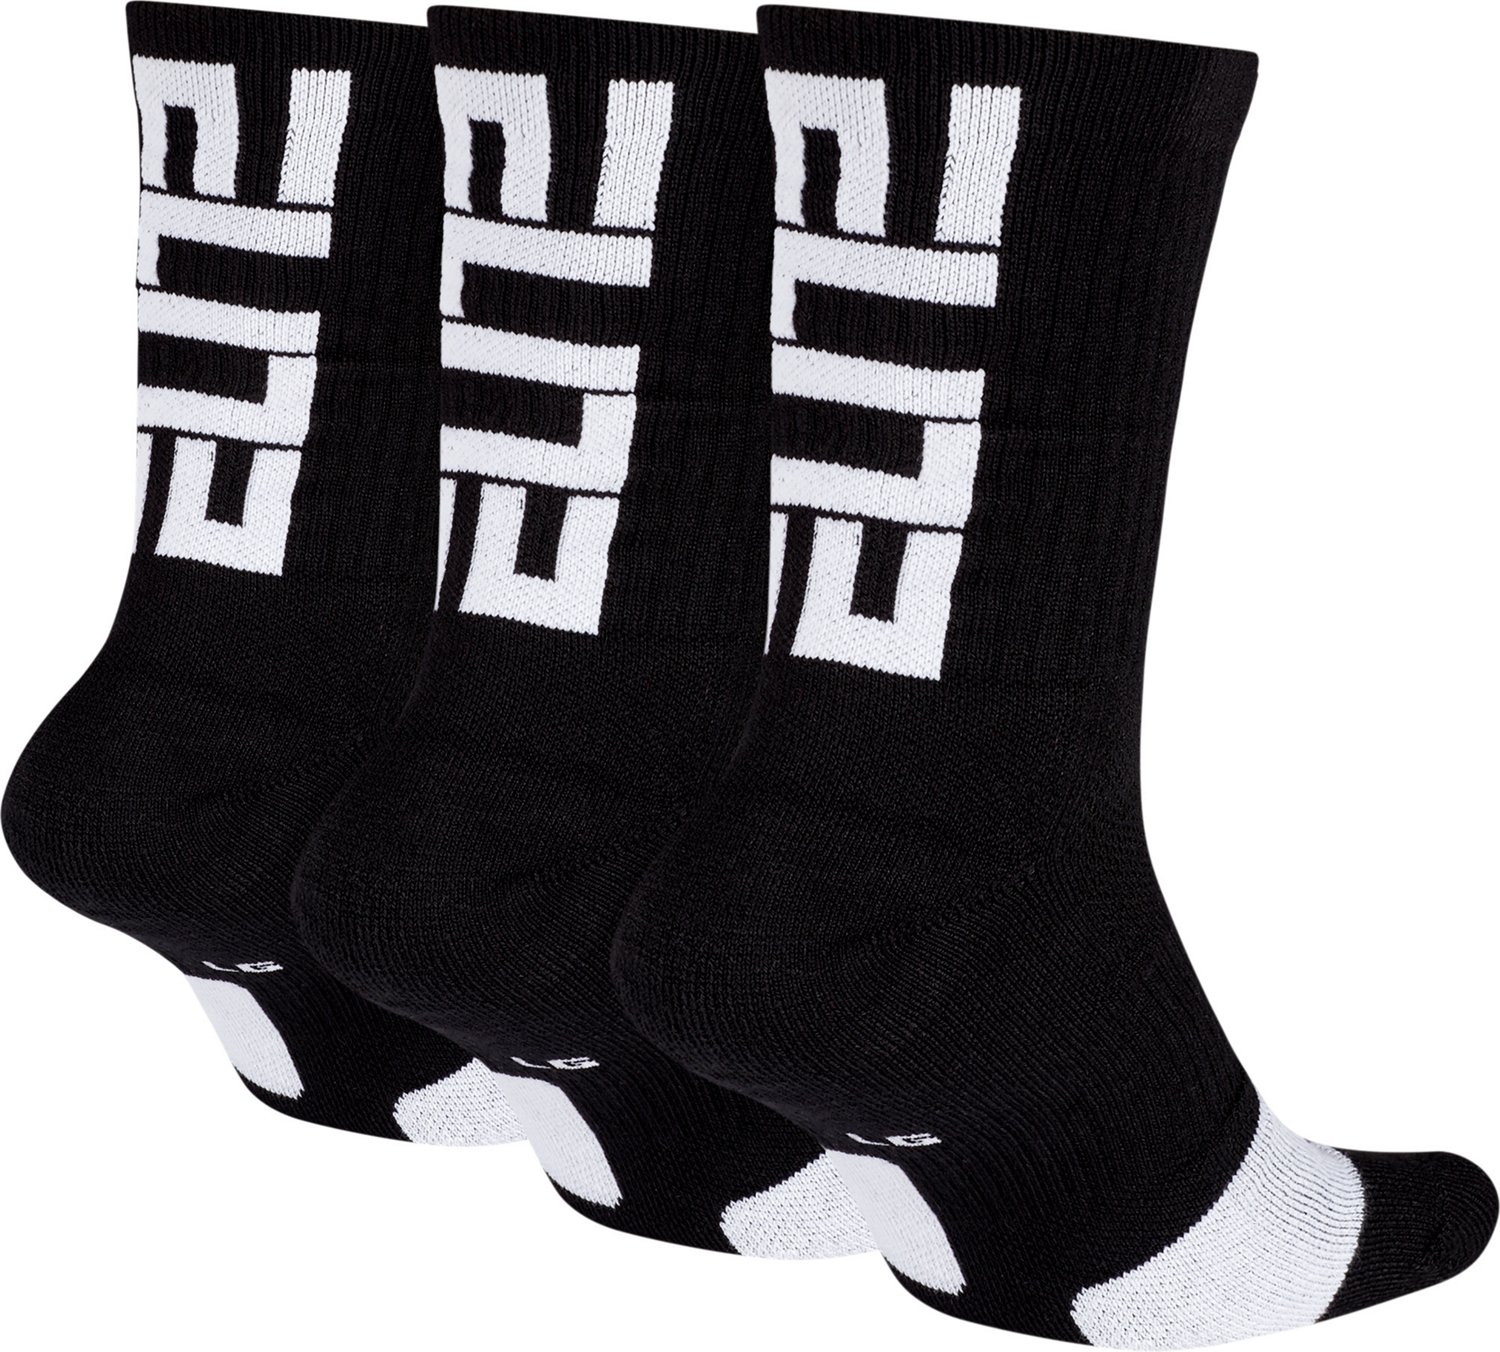 Nike Elite Basketball Crew Socks 3 Pack | Academy nike elite socks blue and red